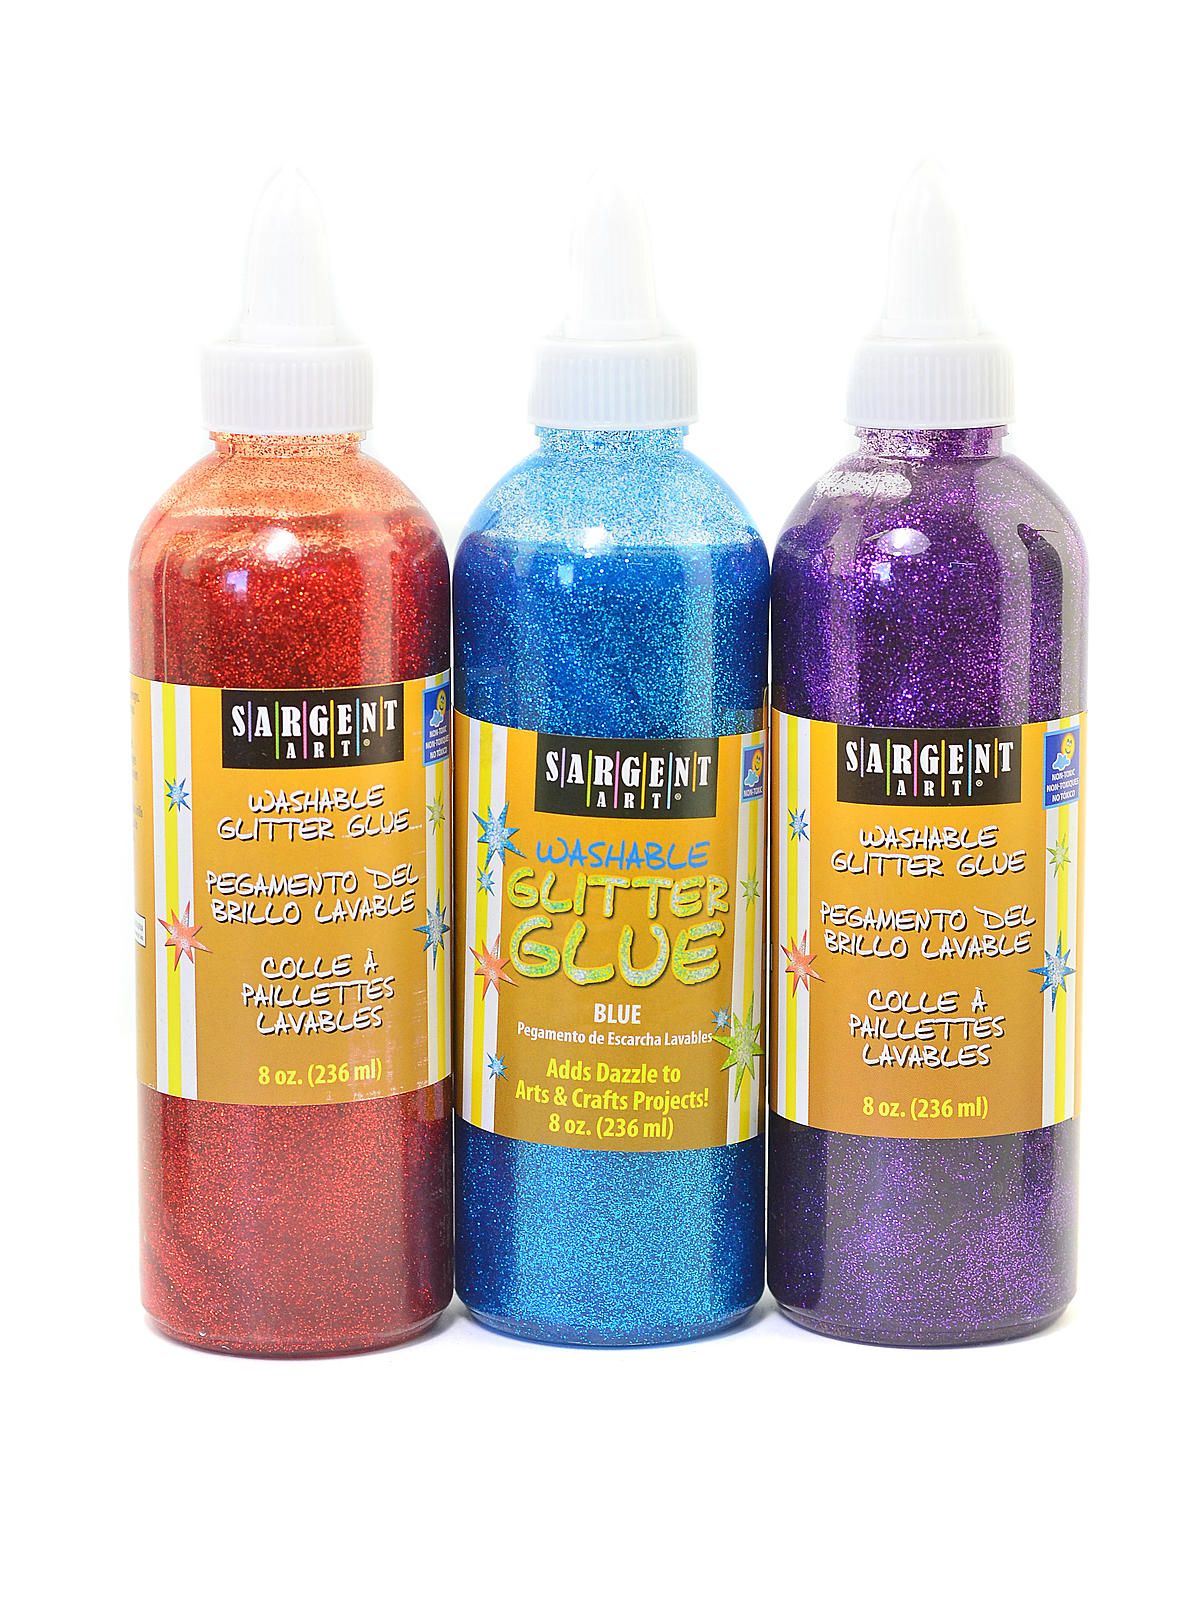 Sargent Art - Washable Glitter Glue